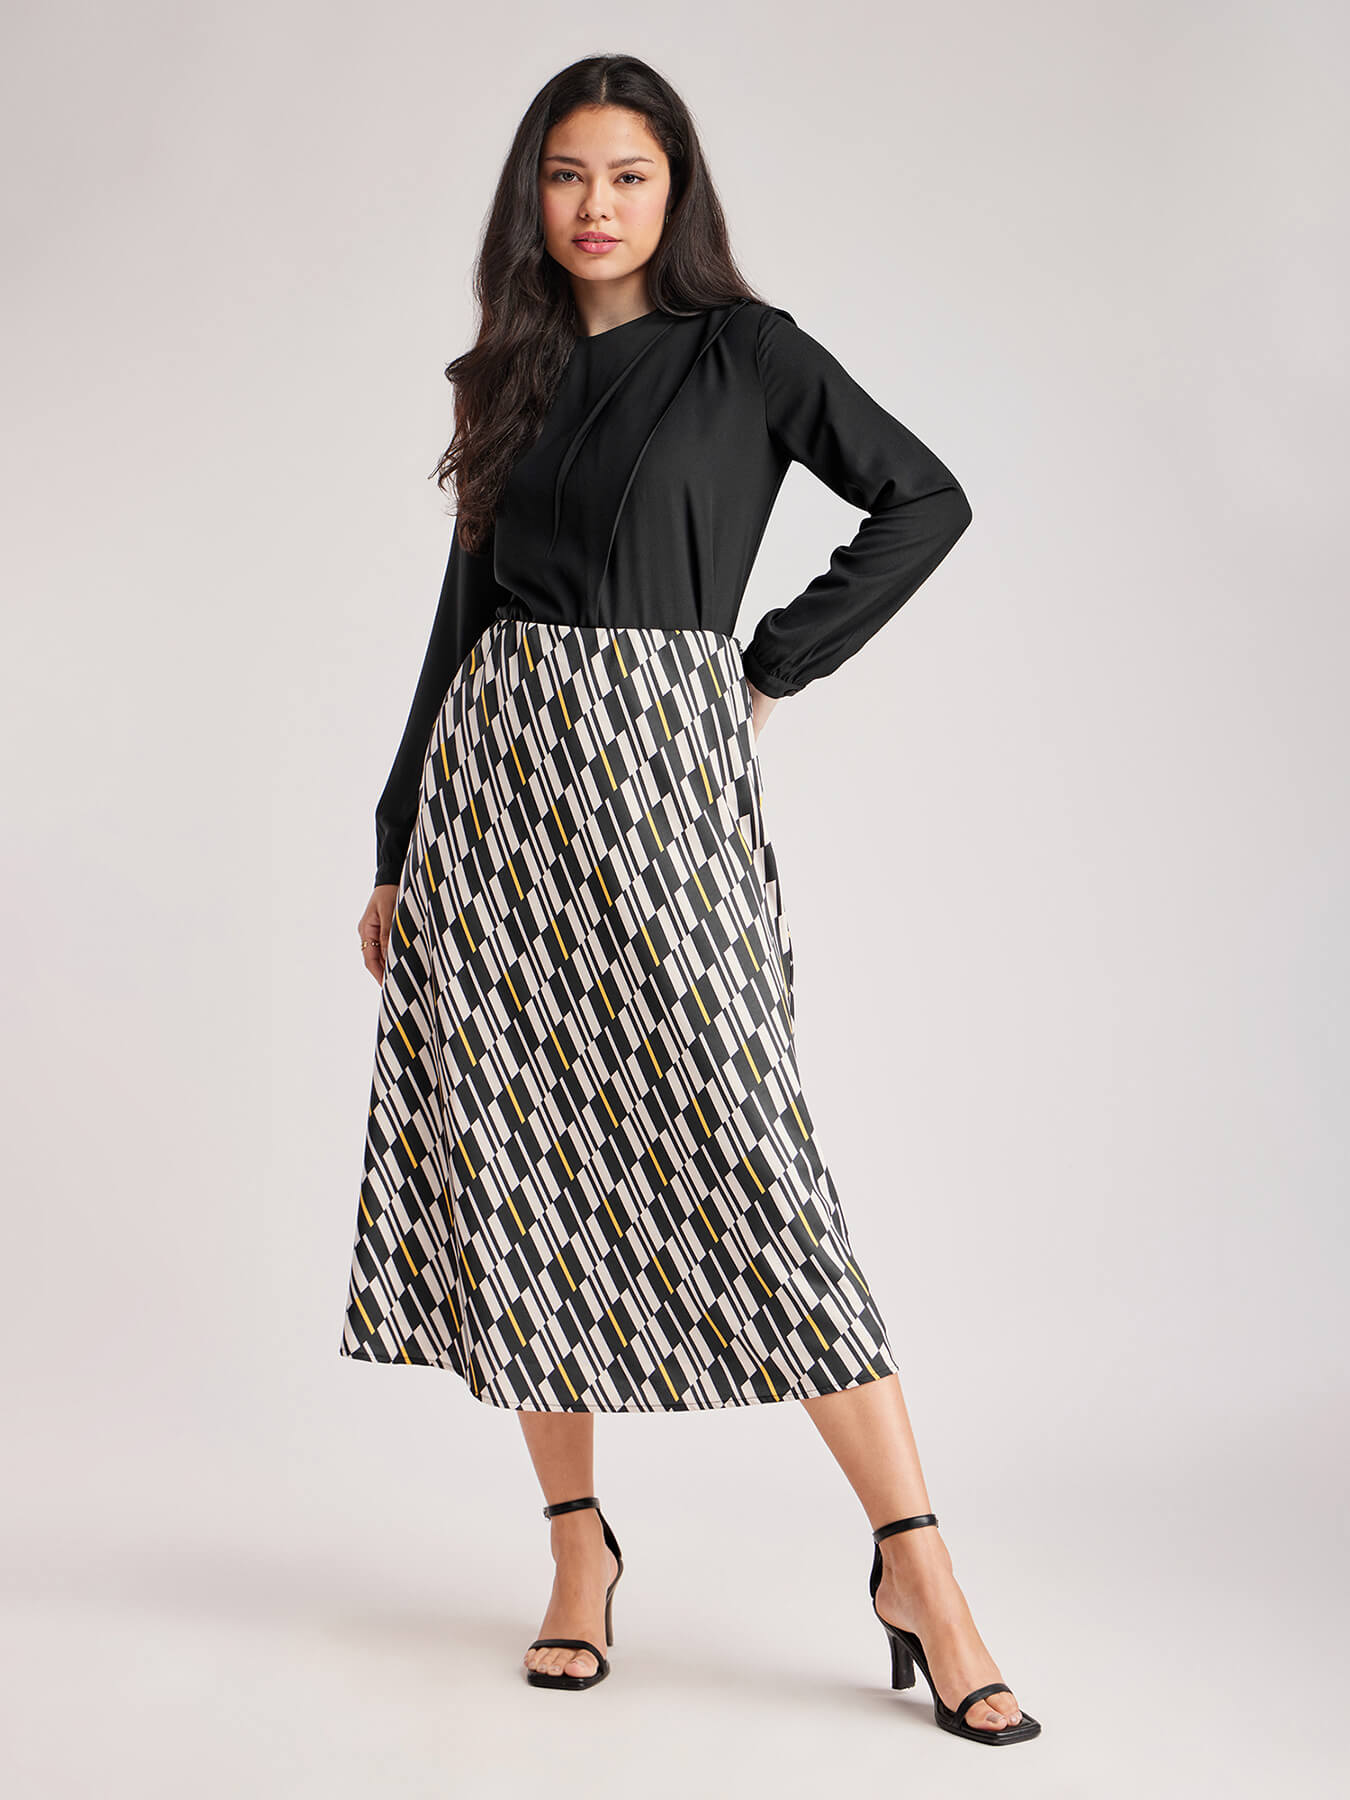 Geometric Print A-Line Skirt - Black And Off White